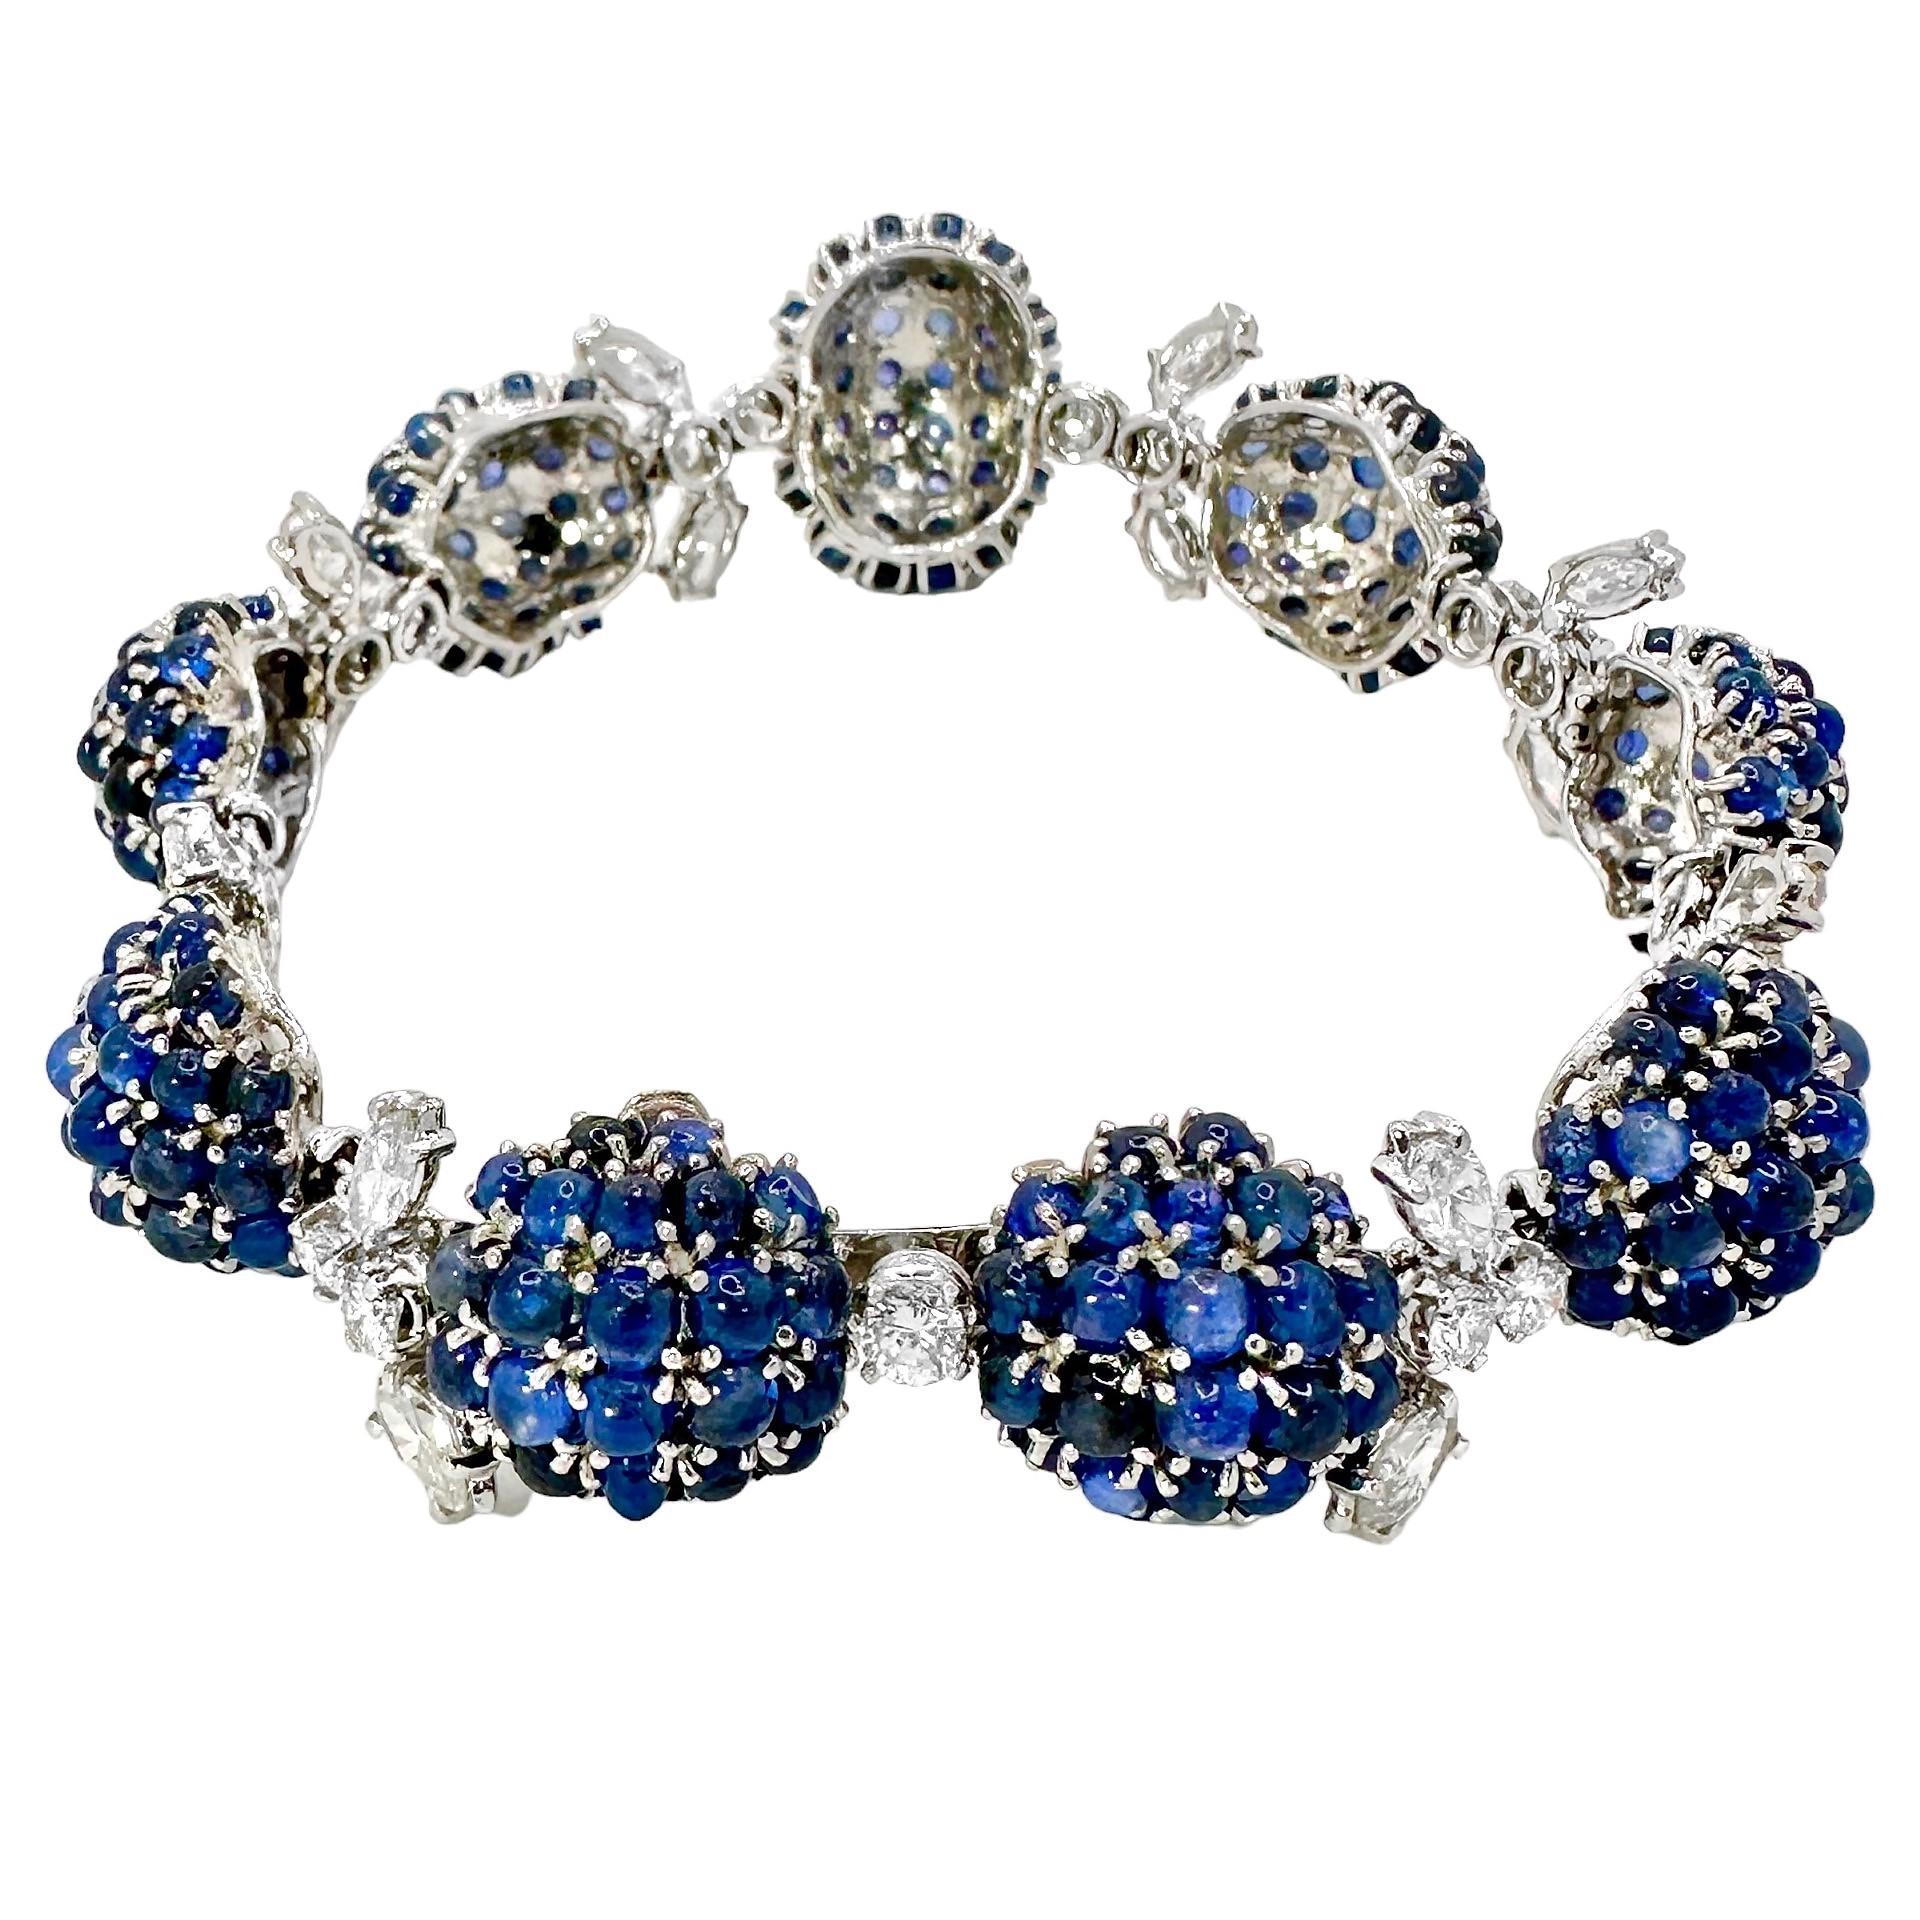 Retro Elegant Mid-20th Century Platinum, Diamond and Sapphire Cocktail Bracelet